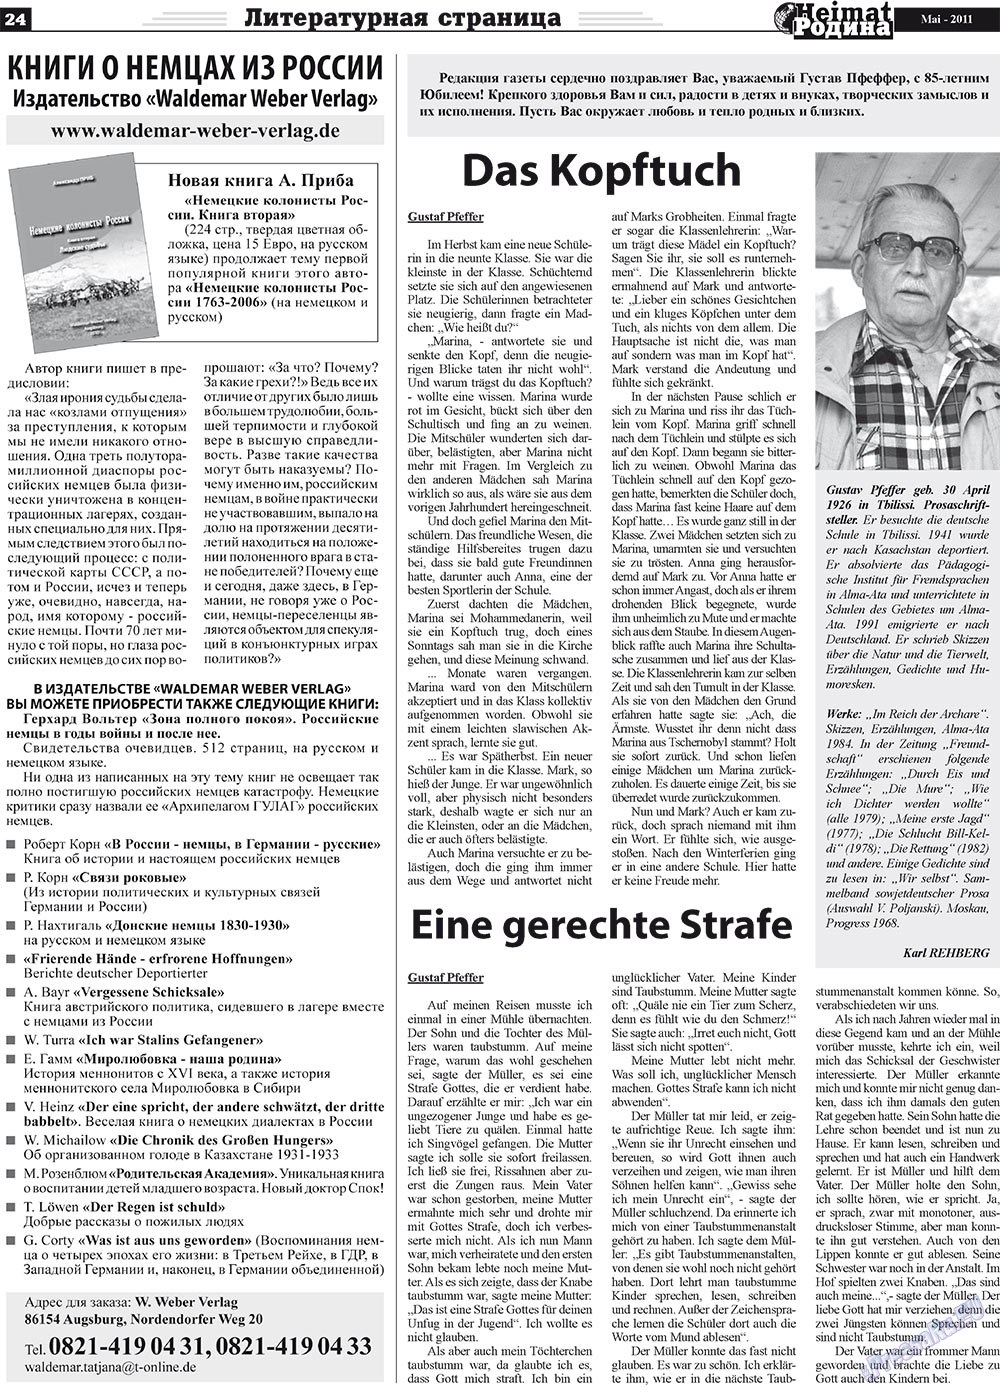 Heimat-Родина, газета. 2011 №5 стр.24